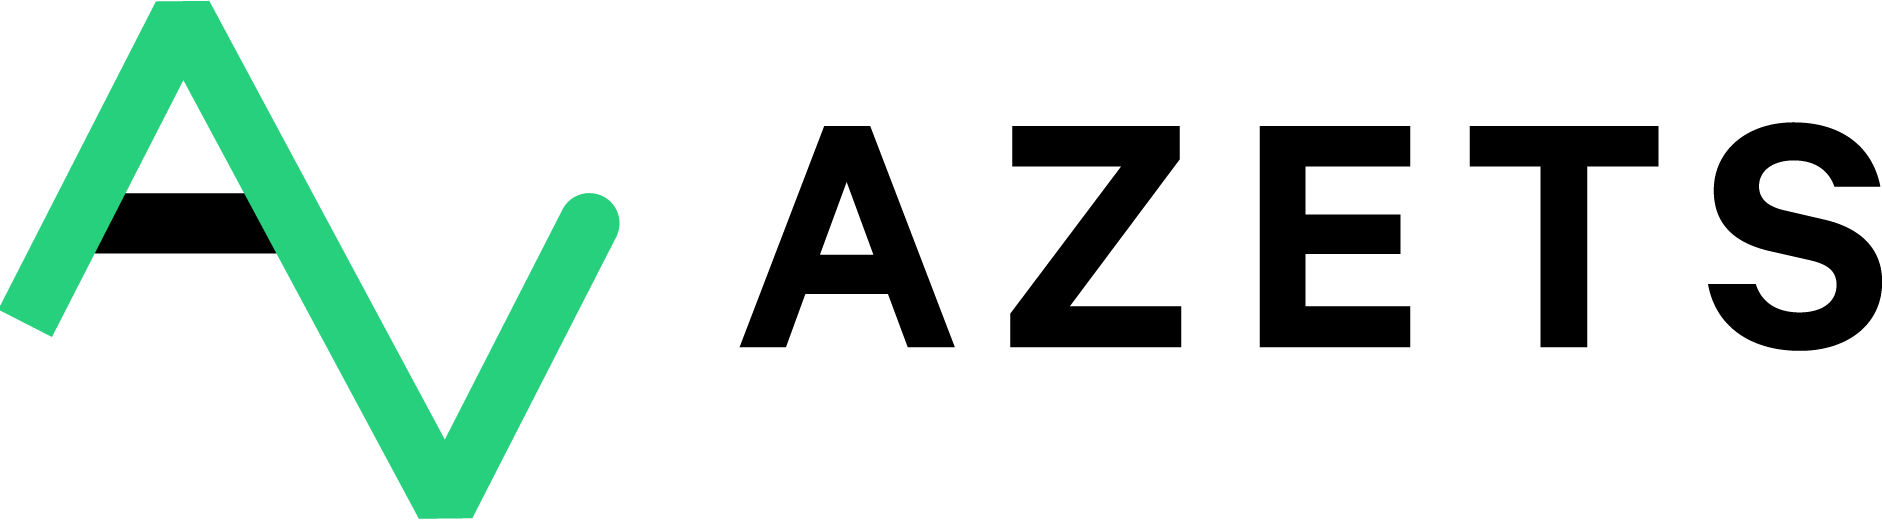 Azets-logo-1-RGB-v1 kopio